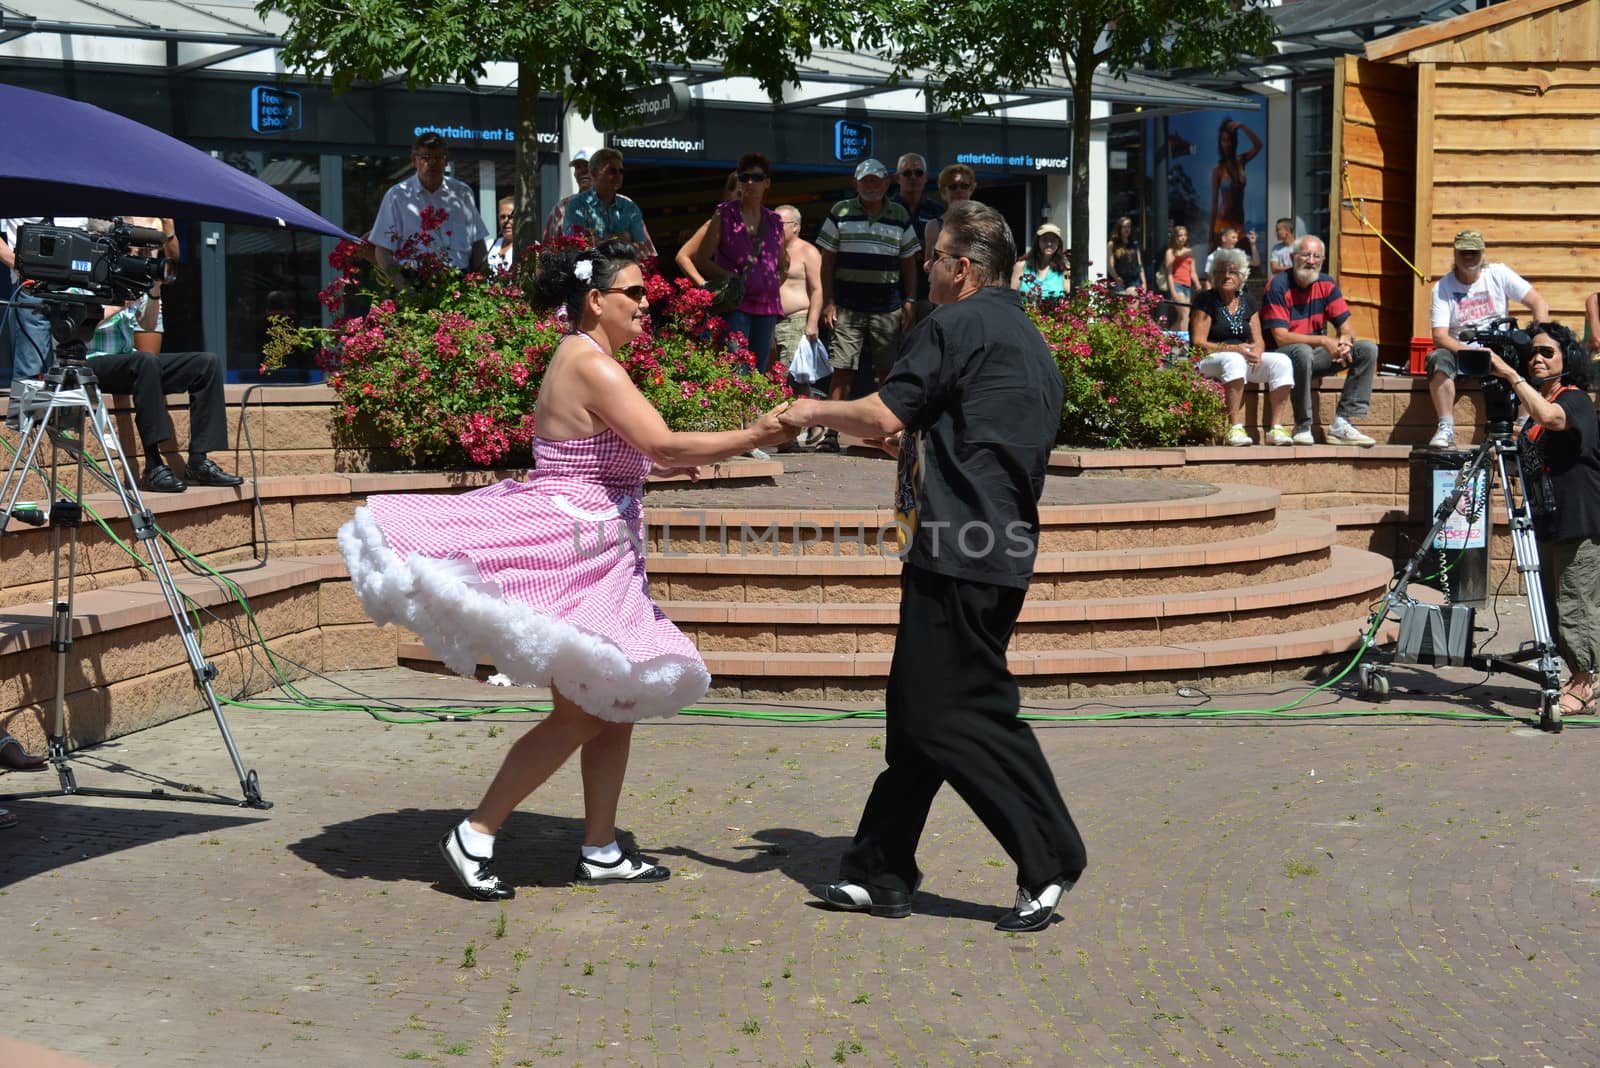 American day with dancers in Hellevoetsluis Netherlands on 21 Juli 2013
